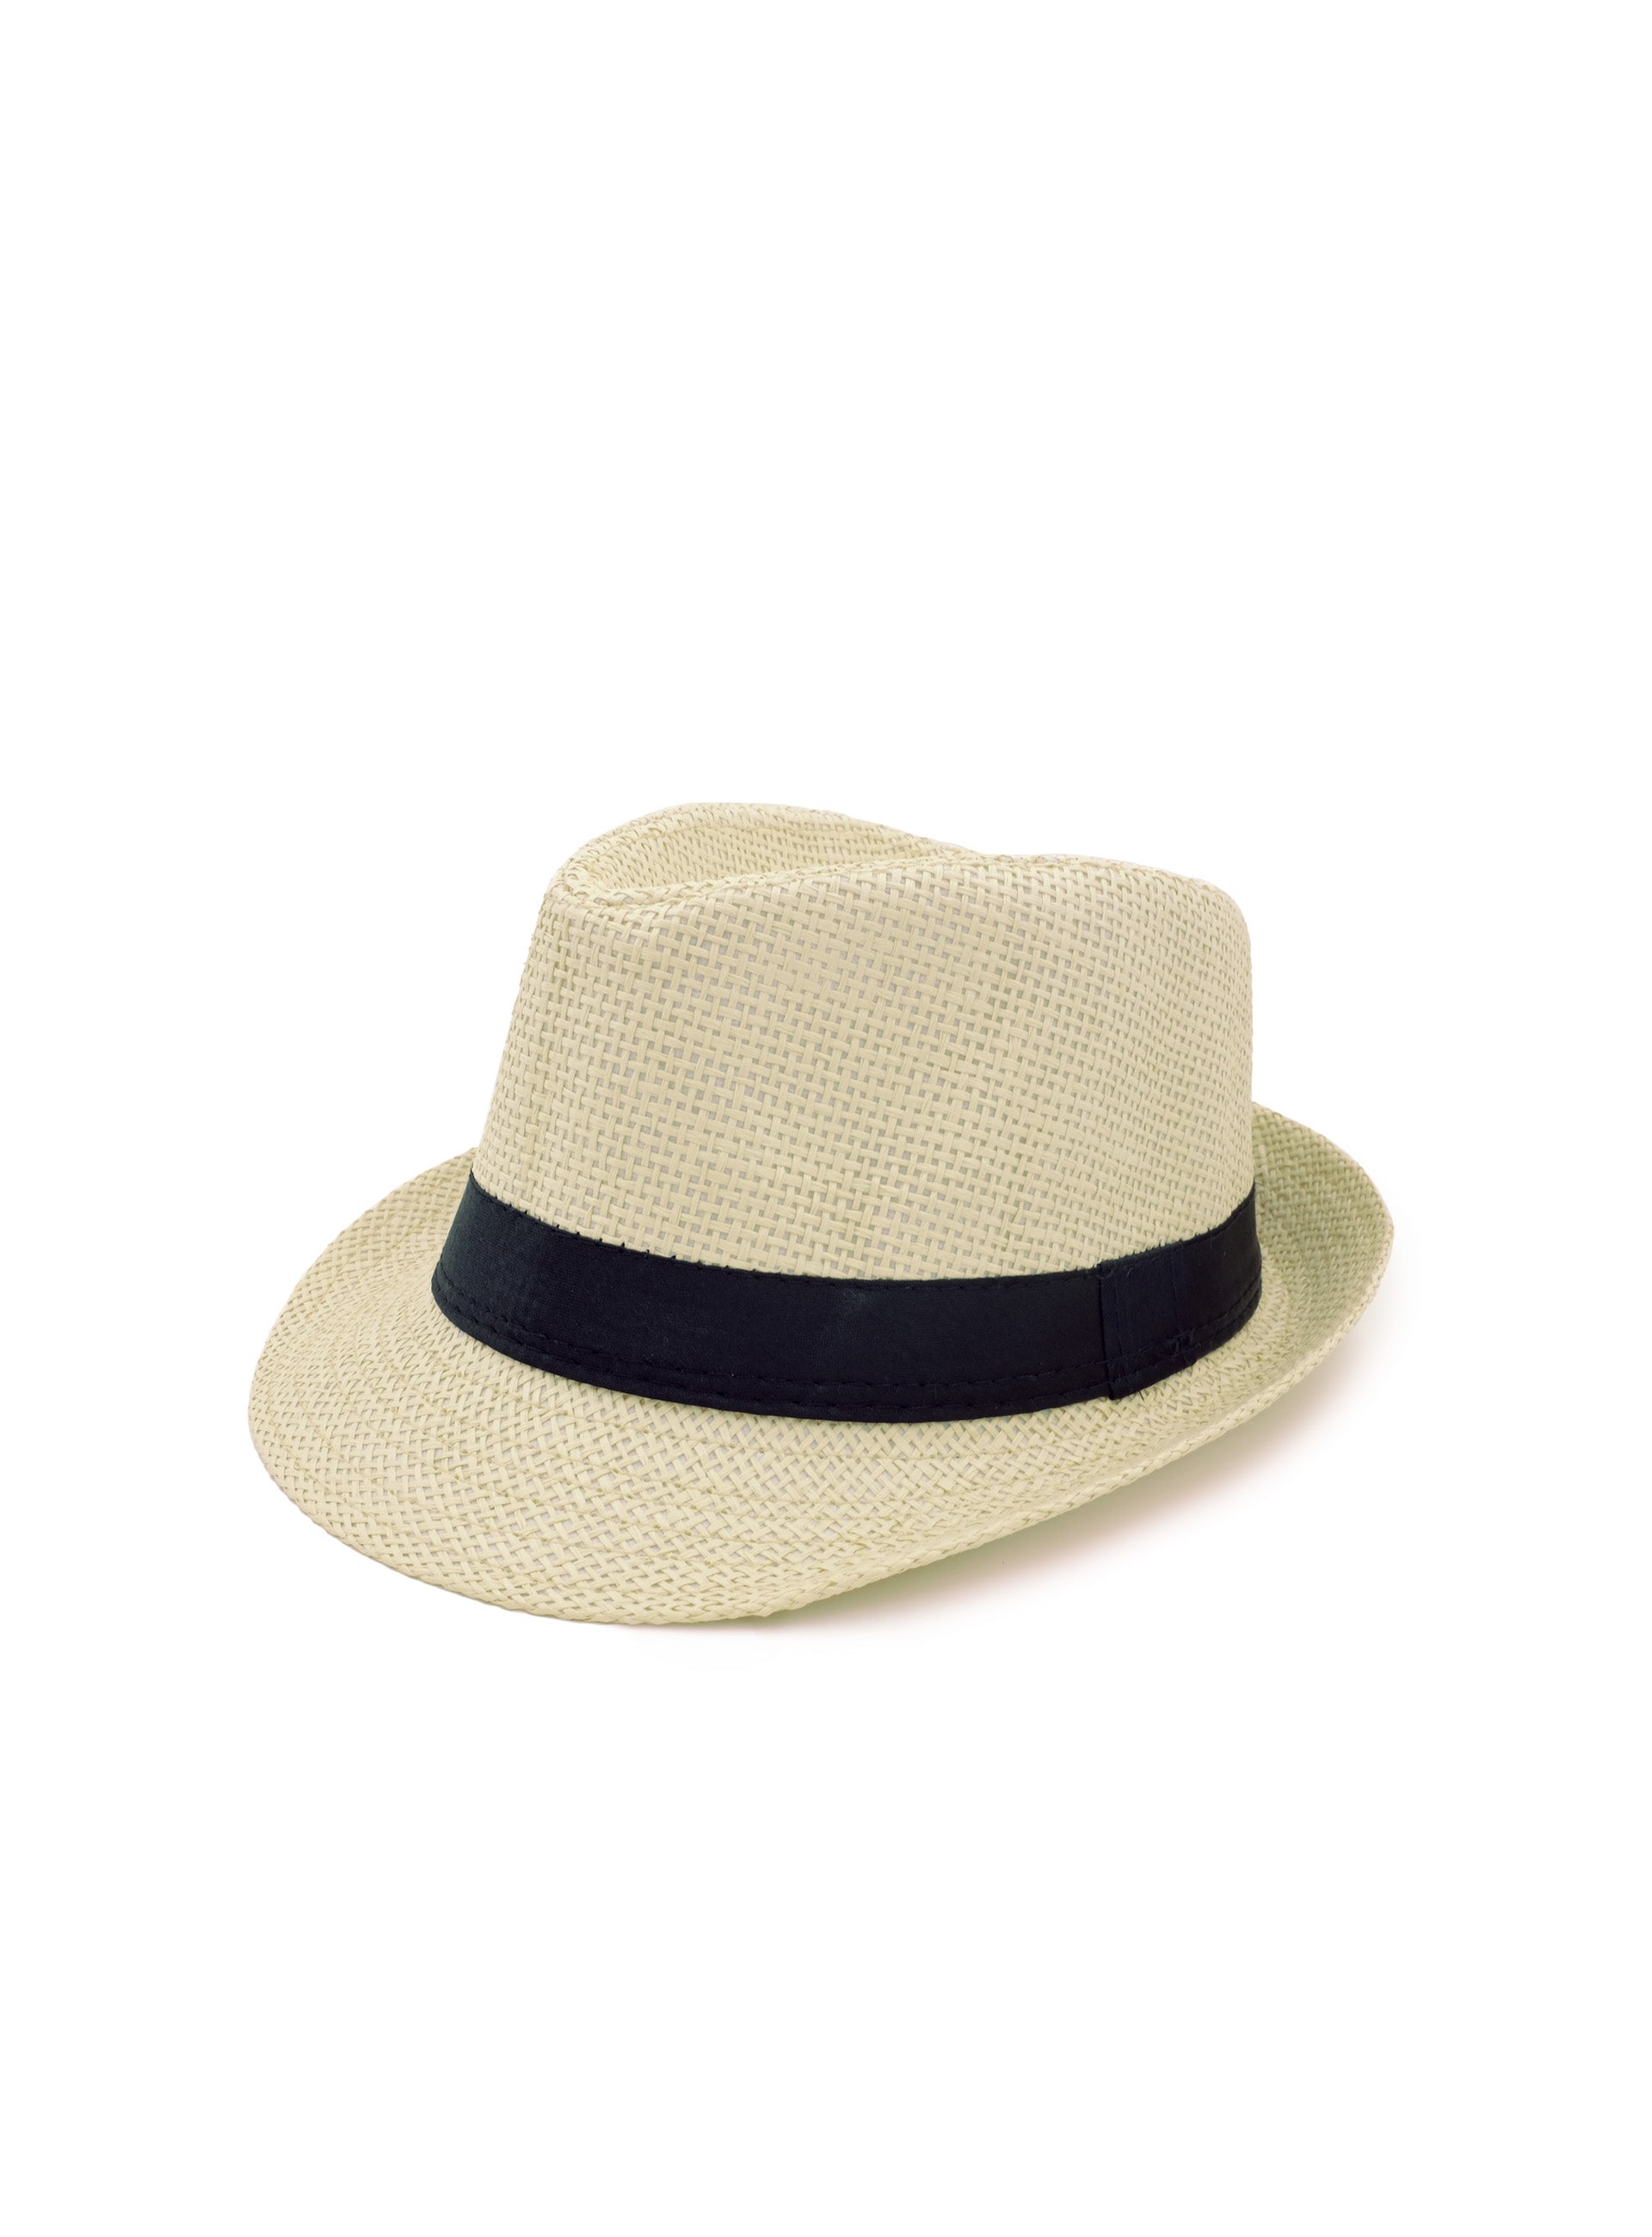 warm tan fedora hat with black band